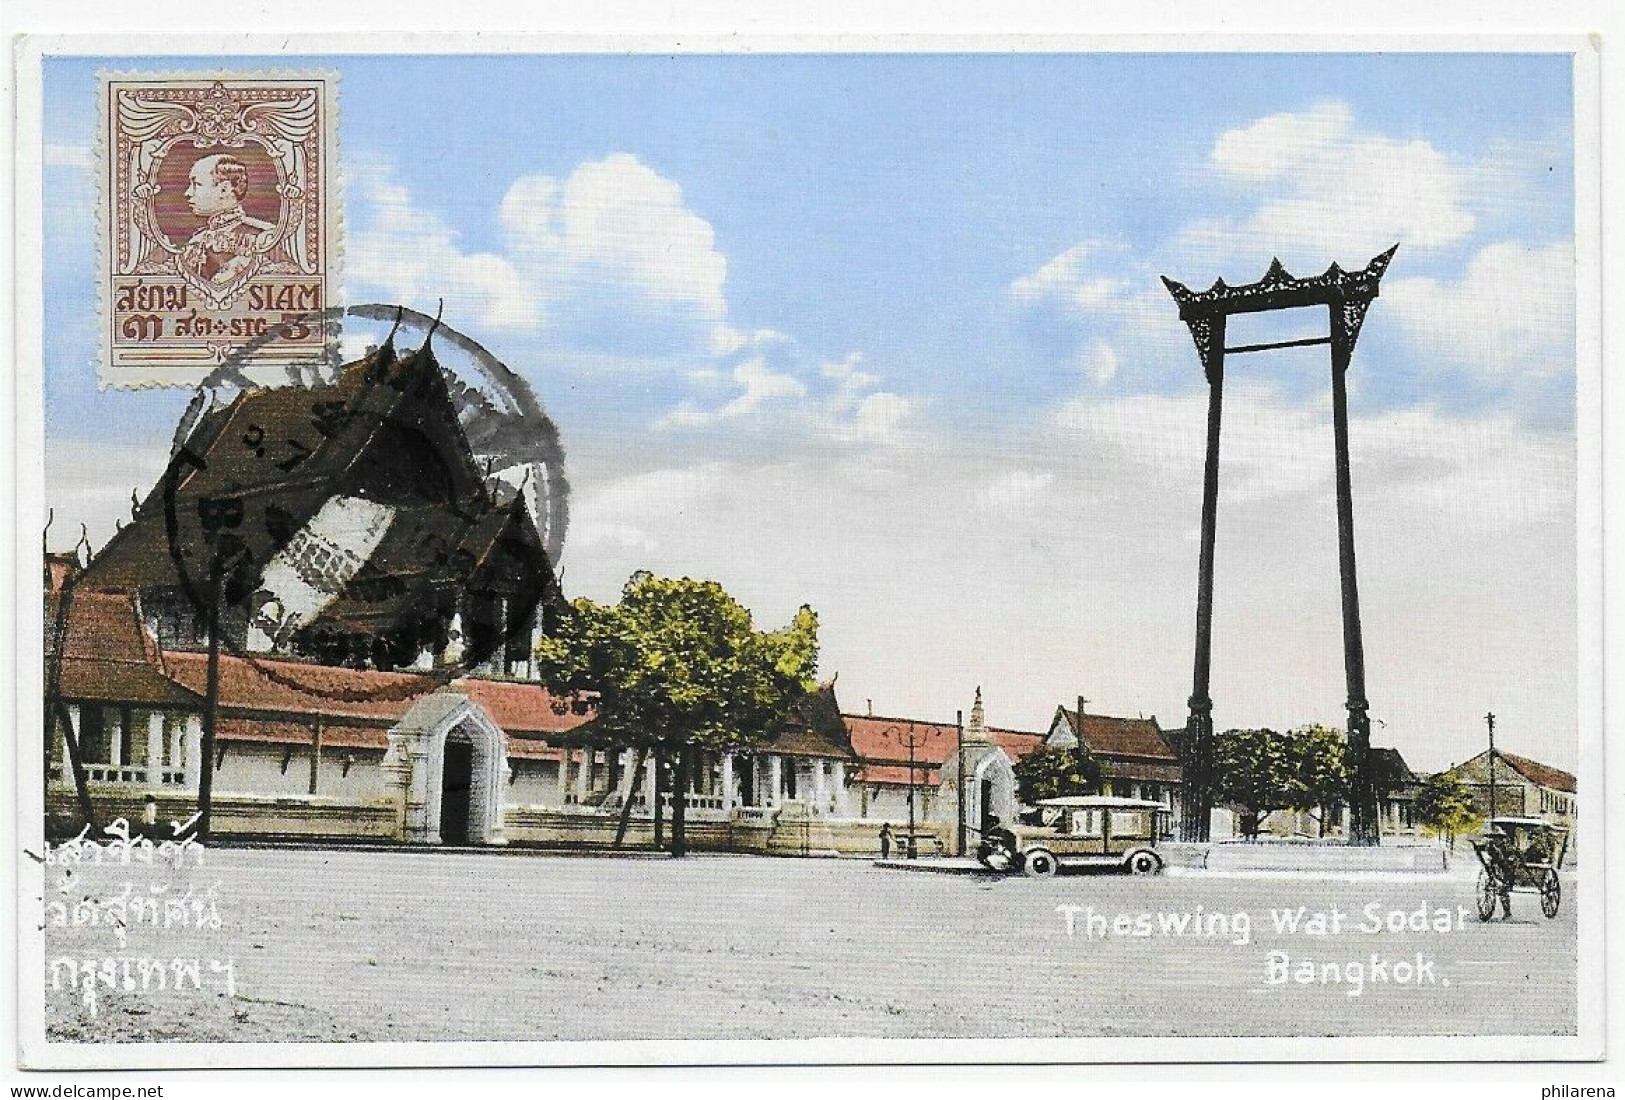 Thailand Ansichtskarte Theswing Wat Sodar, Bangkok, Ca. 1930 - Thailand